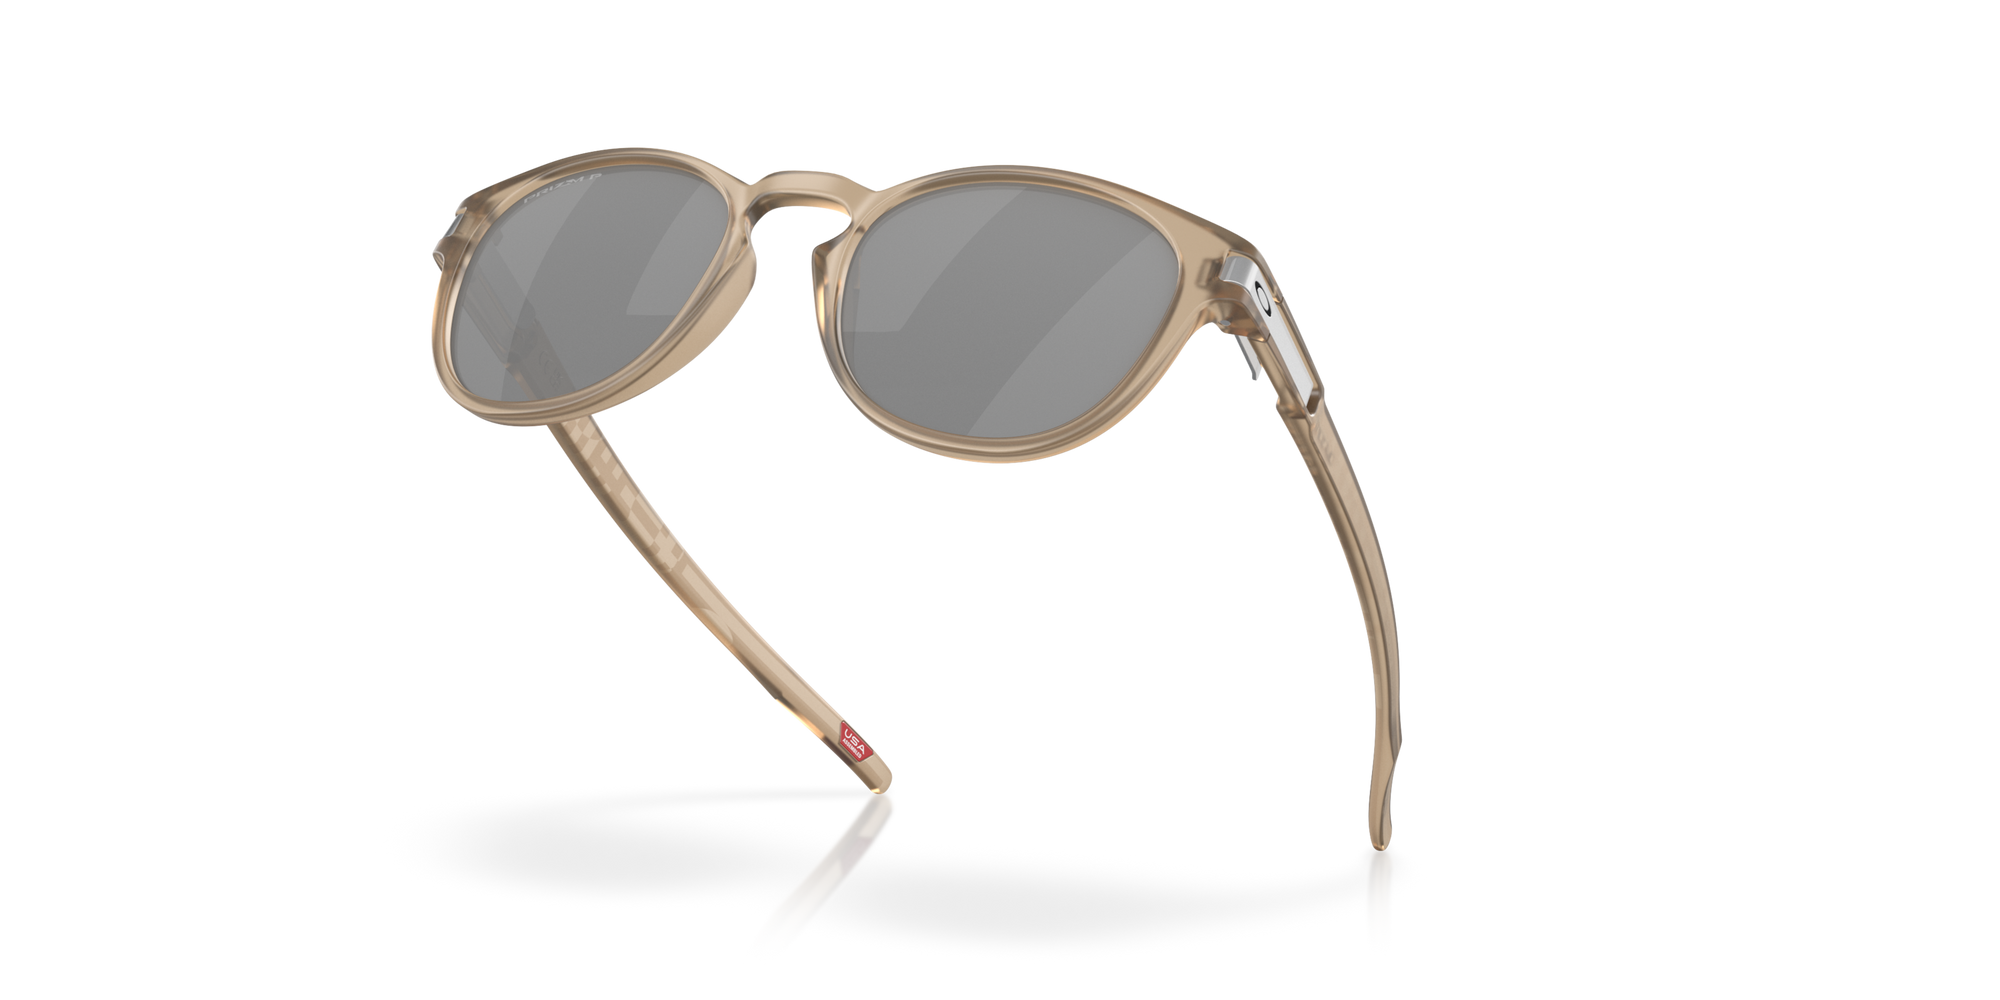 Latch Introspect Collection Sunglasses Matte Sepia - Prizm Black Polarized Lens